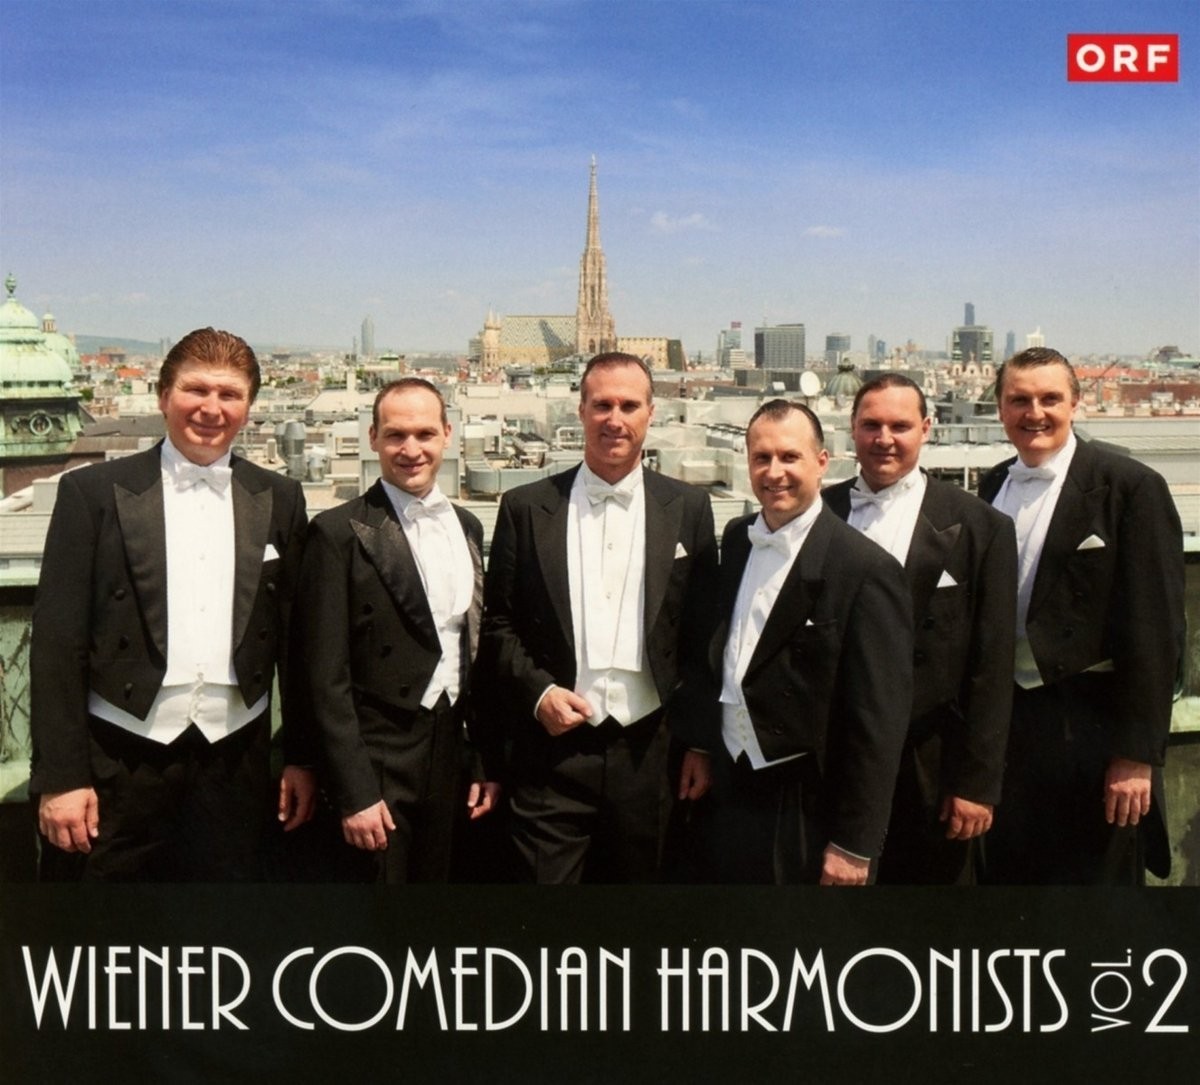 Musik CD Cover der 2. CD der Wiener Comedian Harmonists